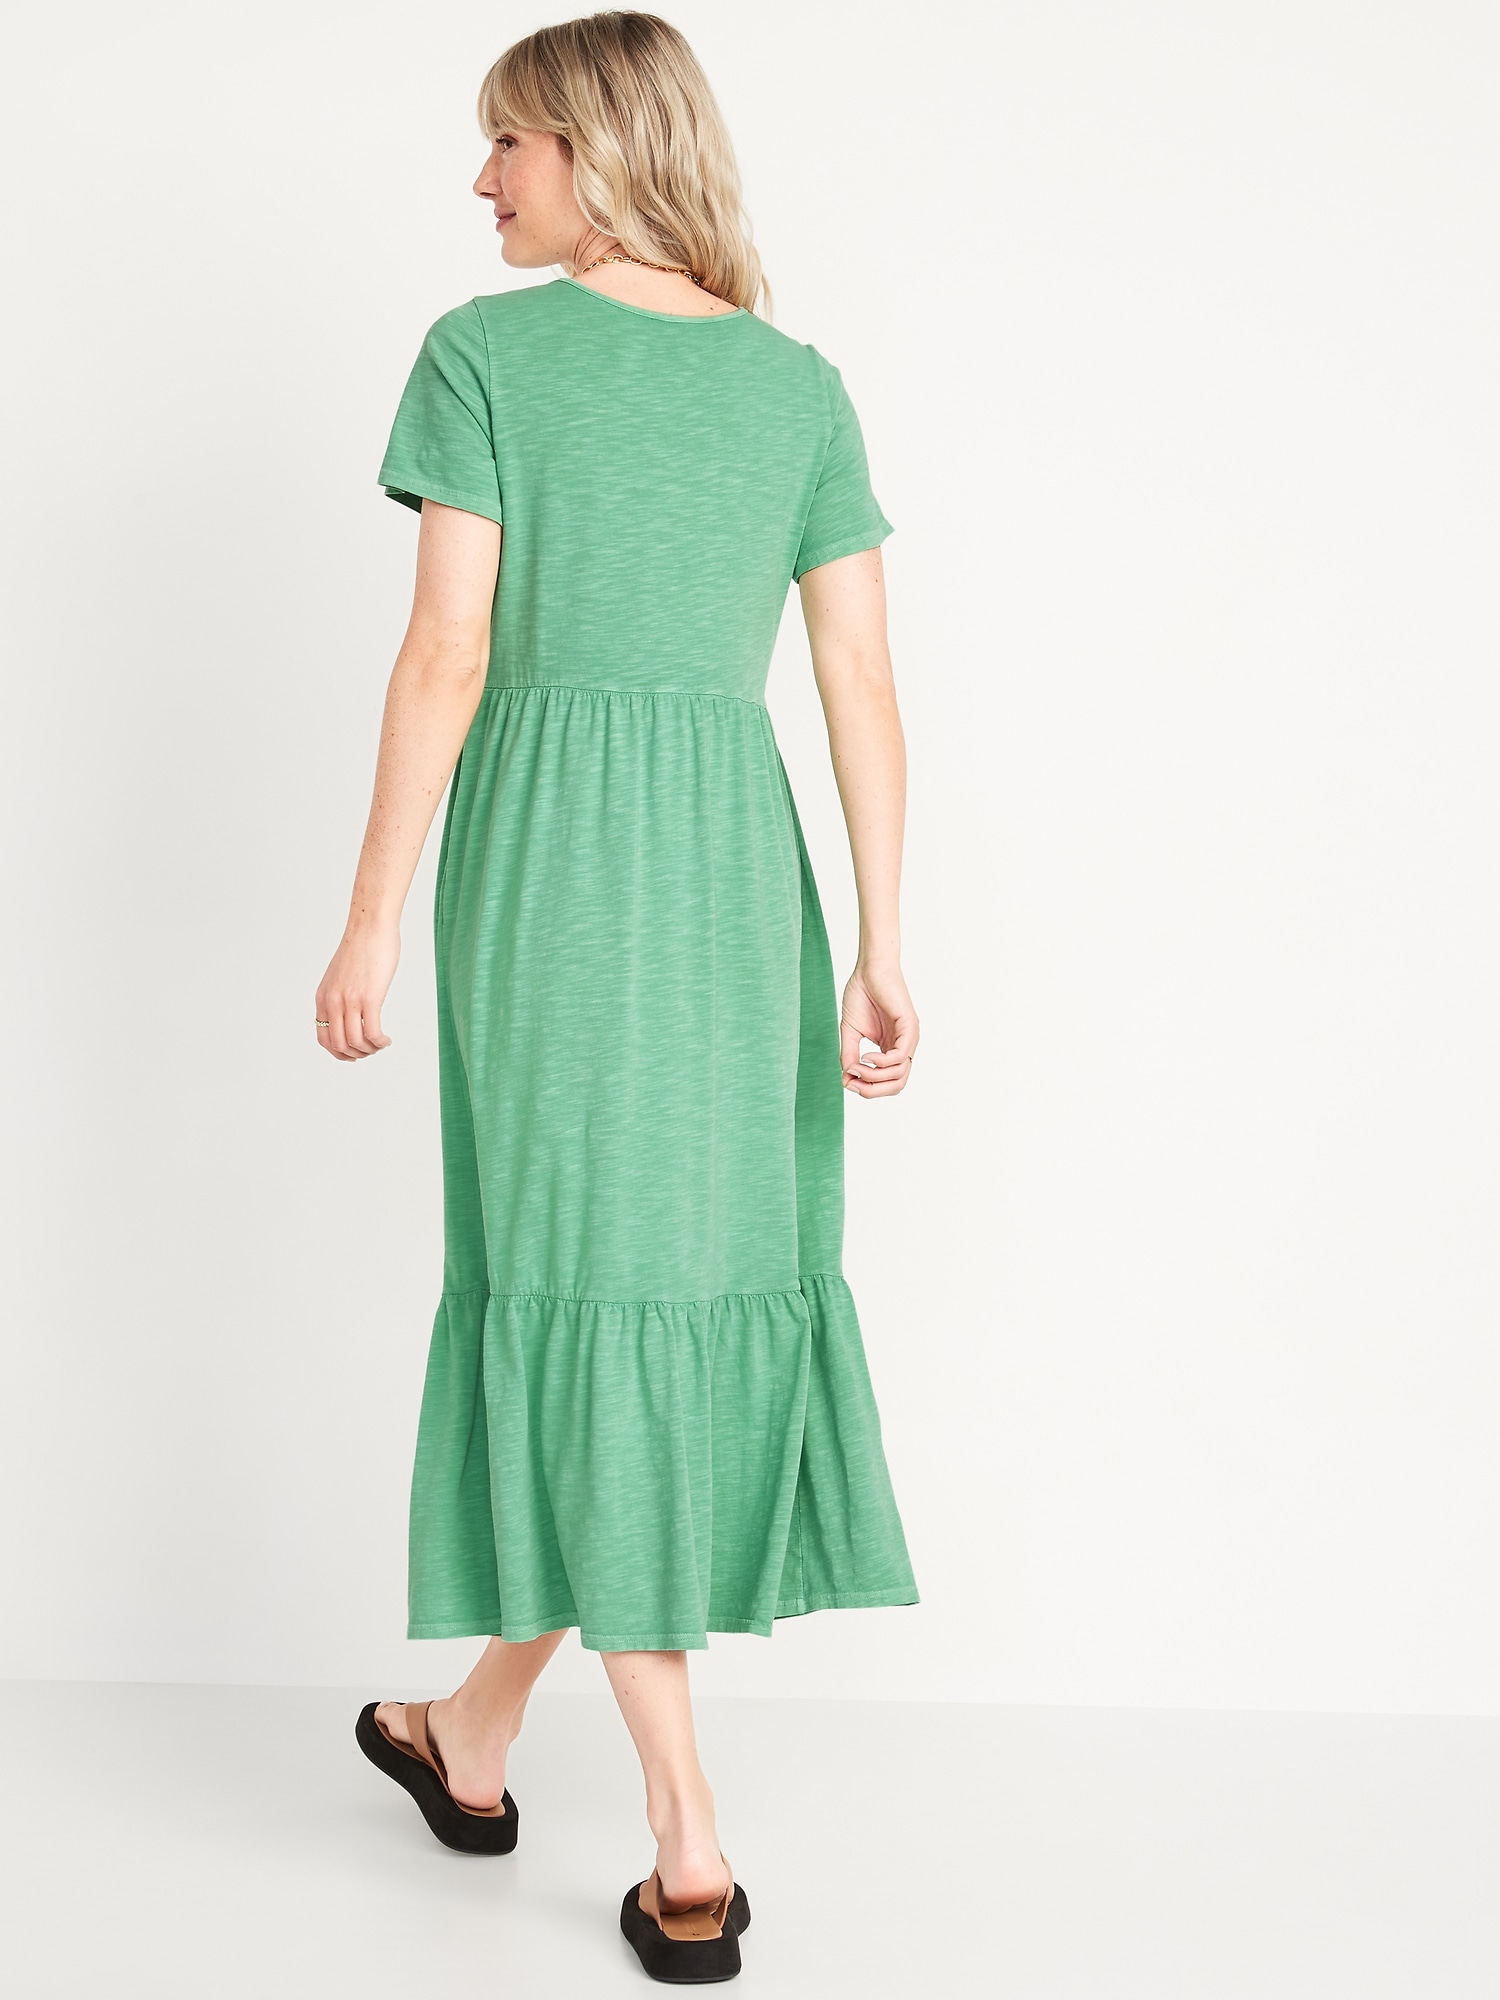 nsendm Womens Summer Casual Plus Size Loose T Shirt Midi Dress Swing Short  Sleeve Baggy Oversize Short Sleeve Solid Tie Dress Dress Green Small 